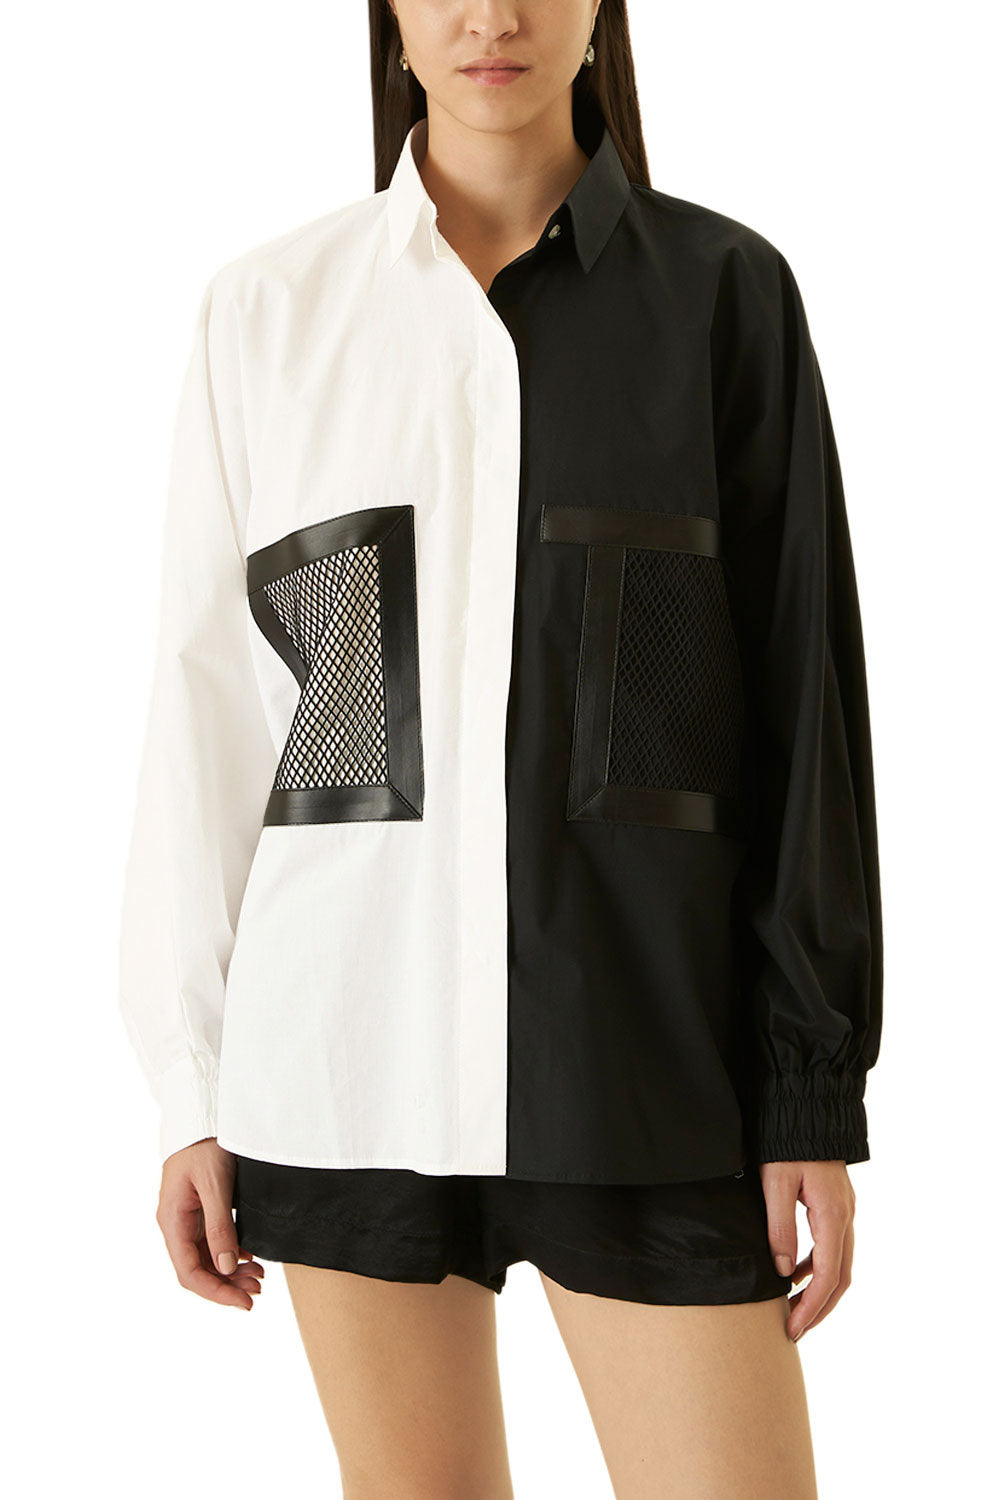 Black and White Yin-yang Shirt